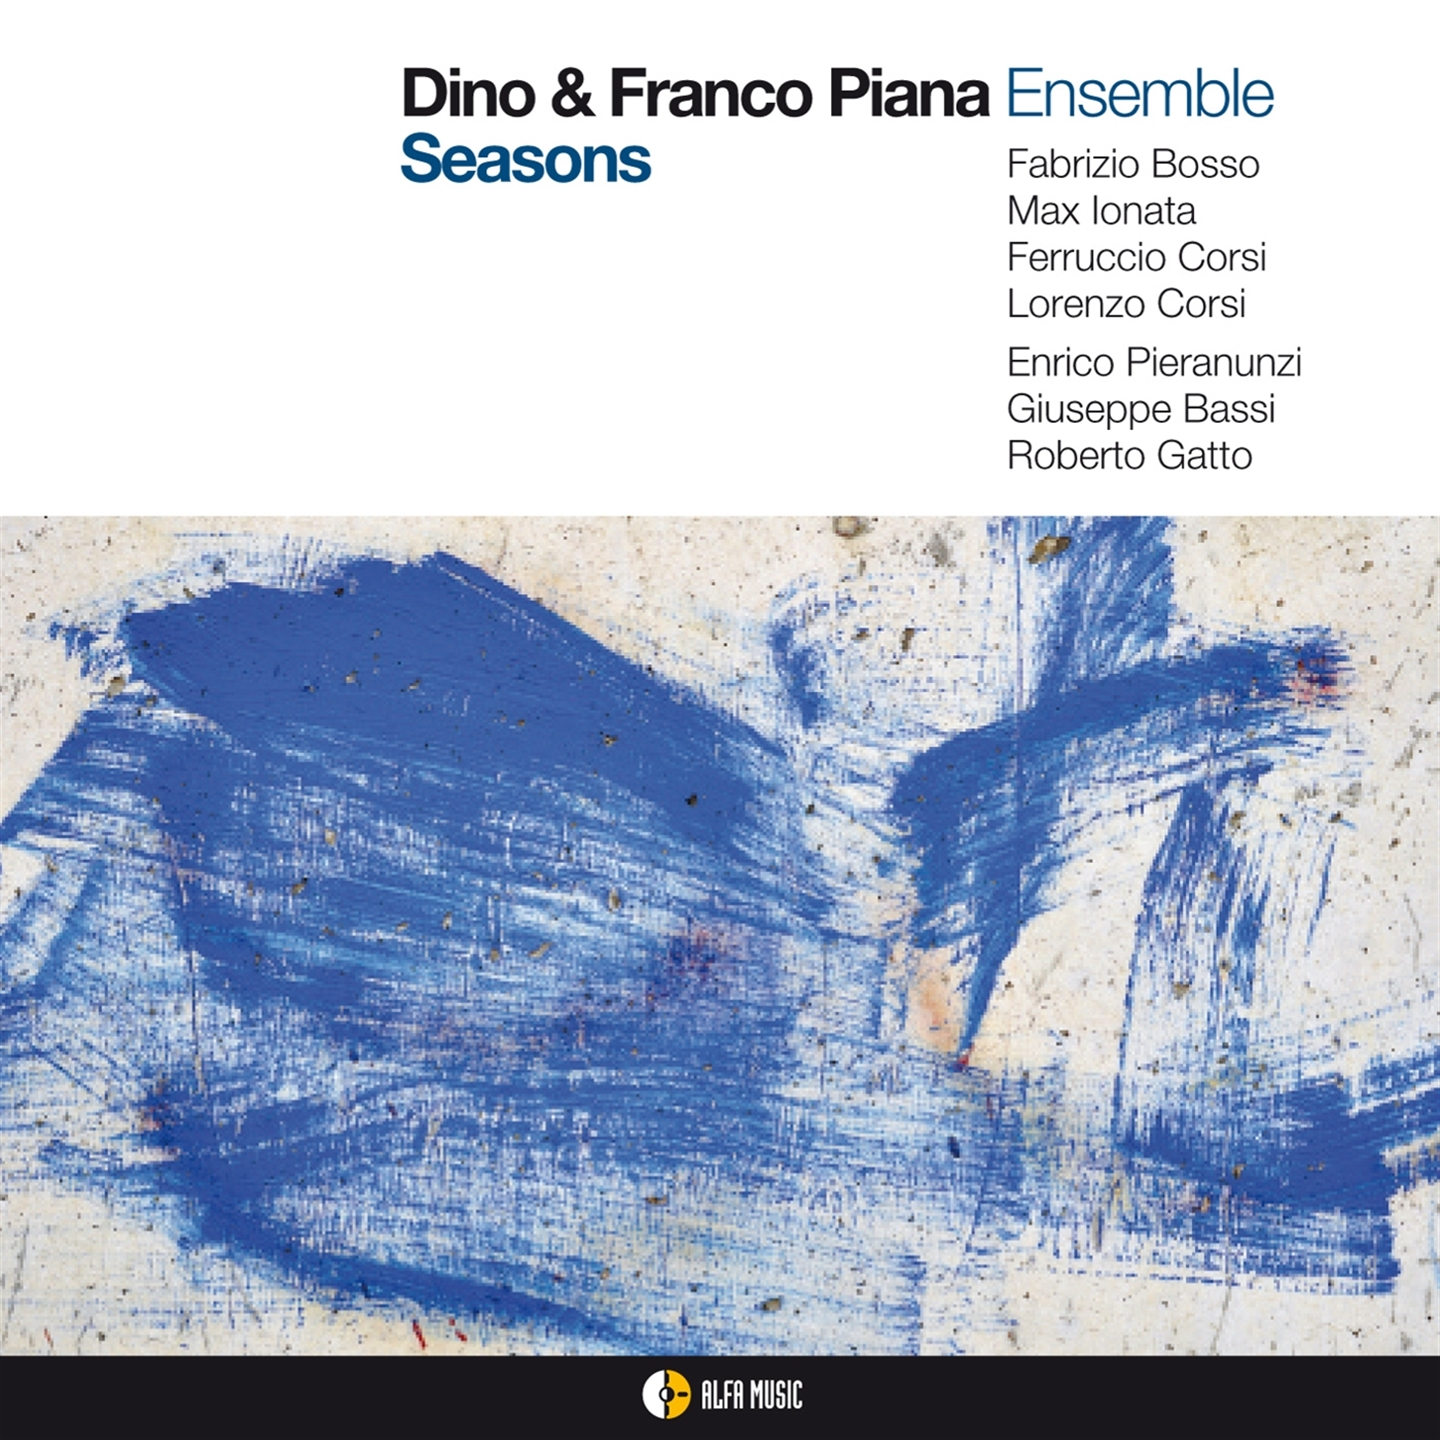 Dino & Franco Piana - Seasons - Picture 1 of 1